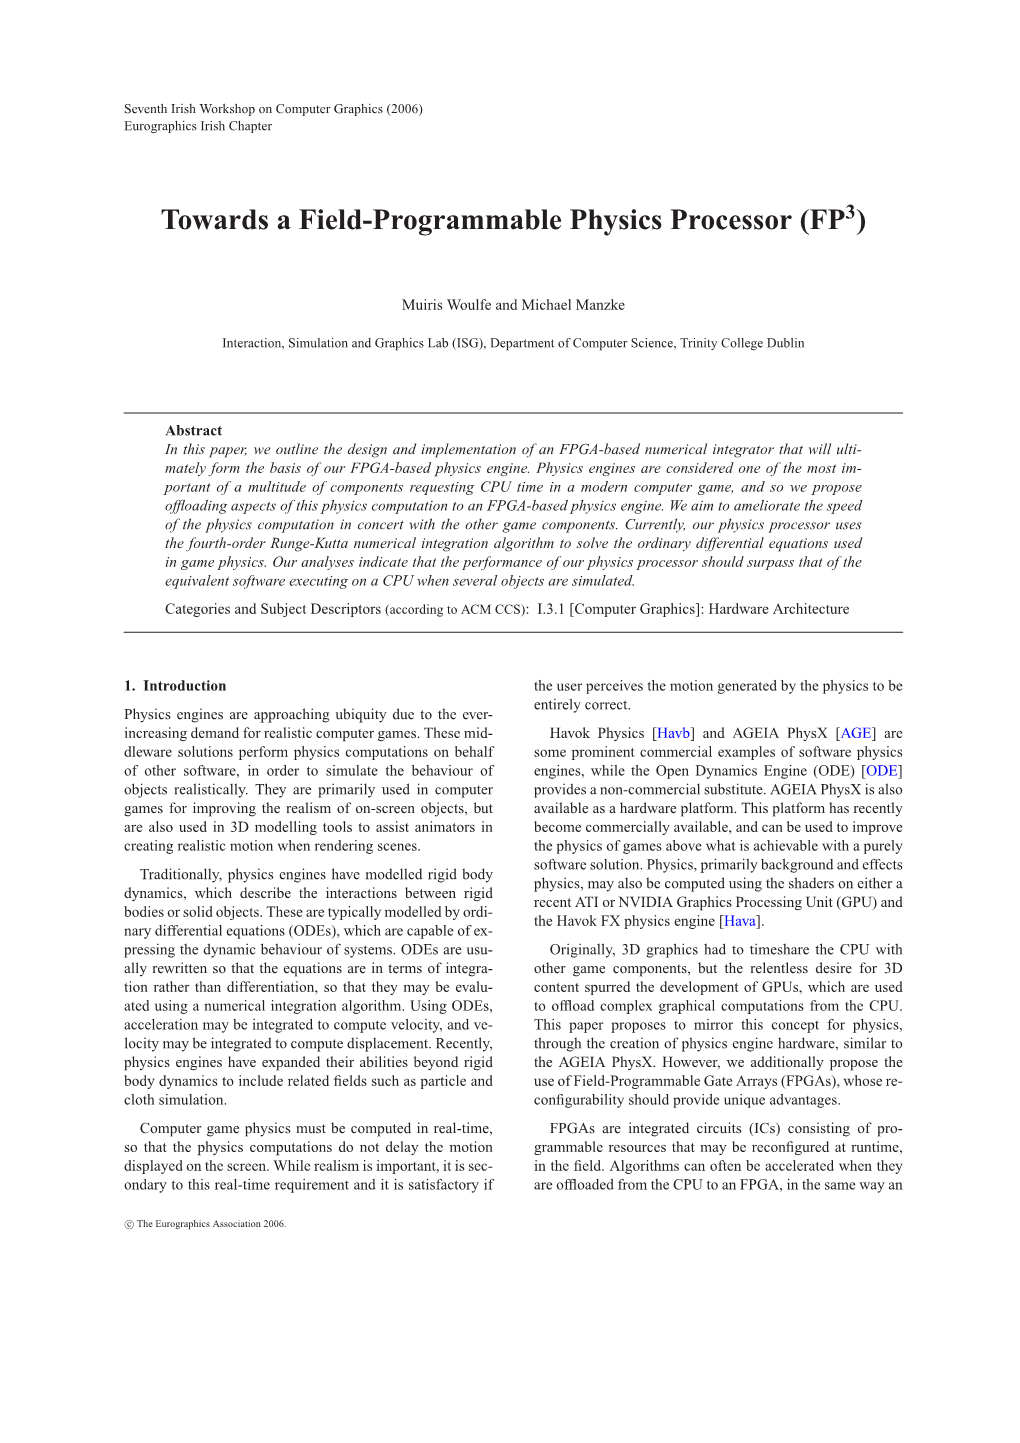 Towards a Field-Programmable Physics Processor (FP3)